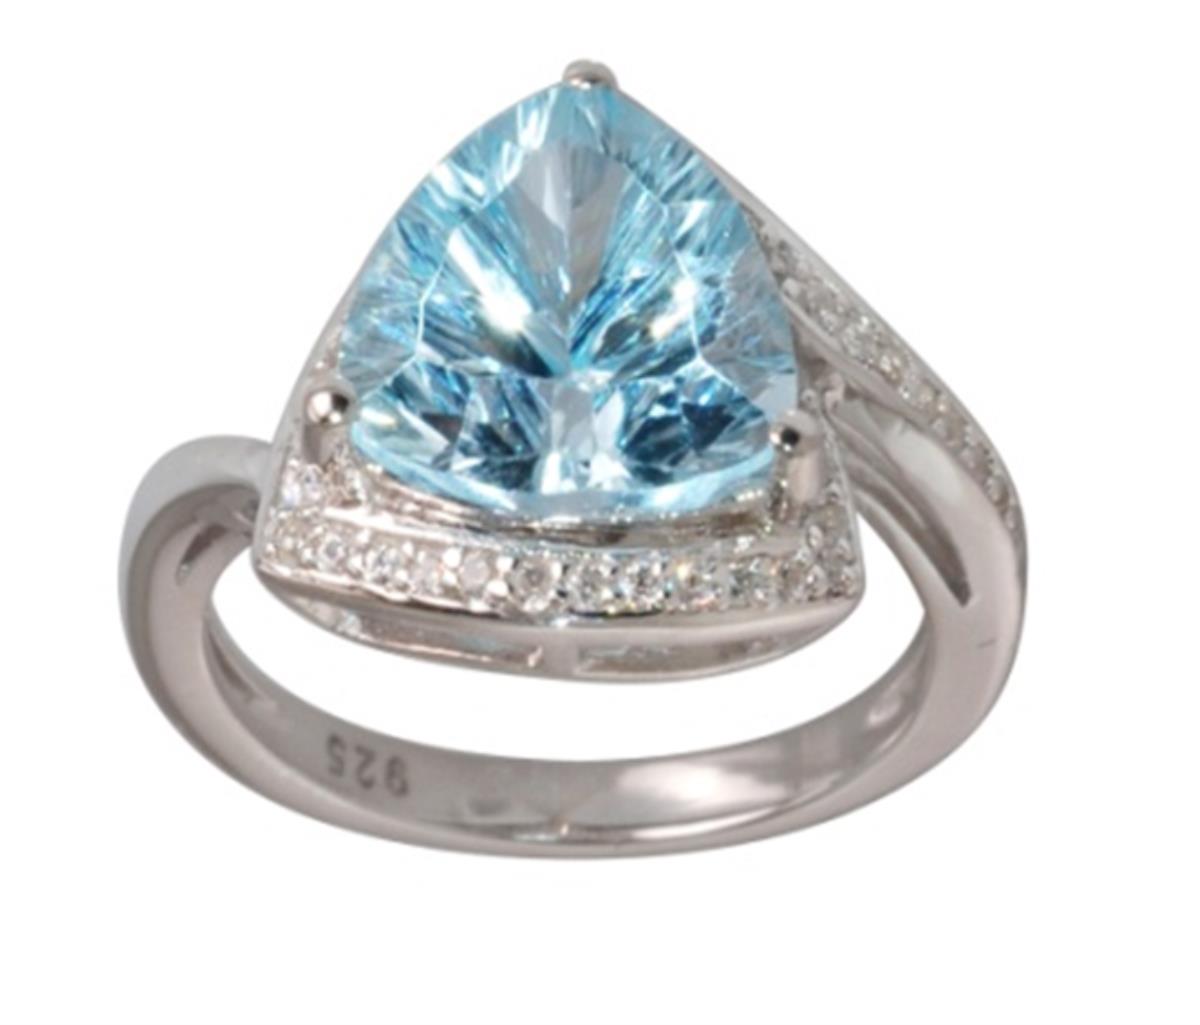 10K White Gold 10mm Trillion Cut Sky Blue Topaz with Rd White Zircon Halo Fashion Ring